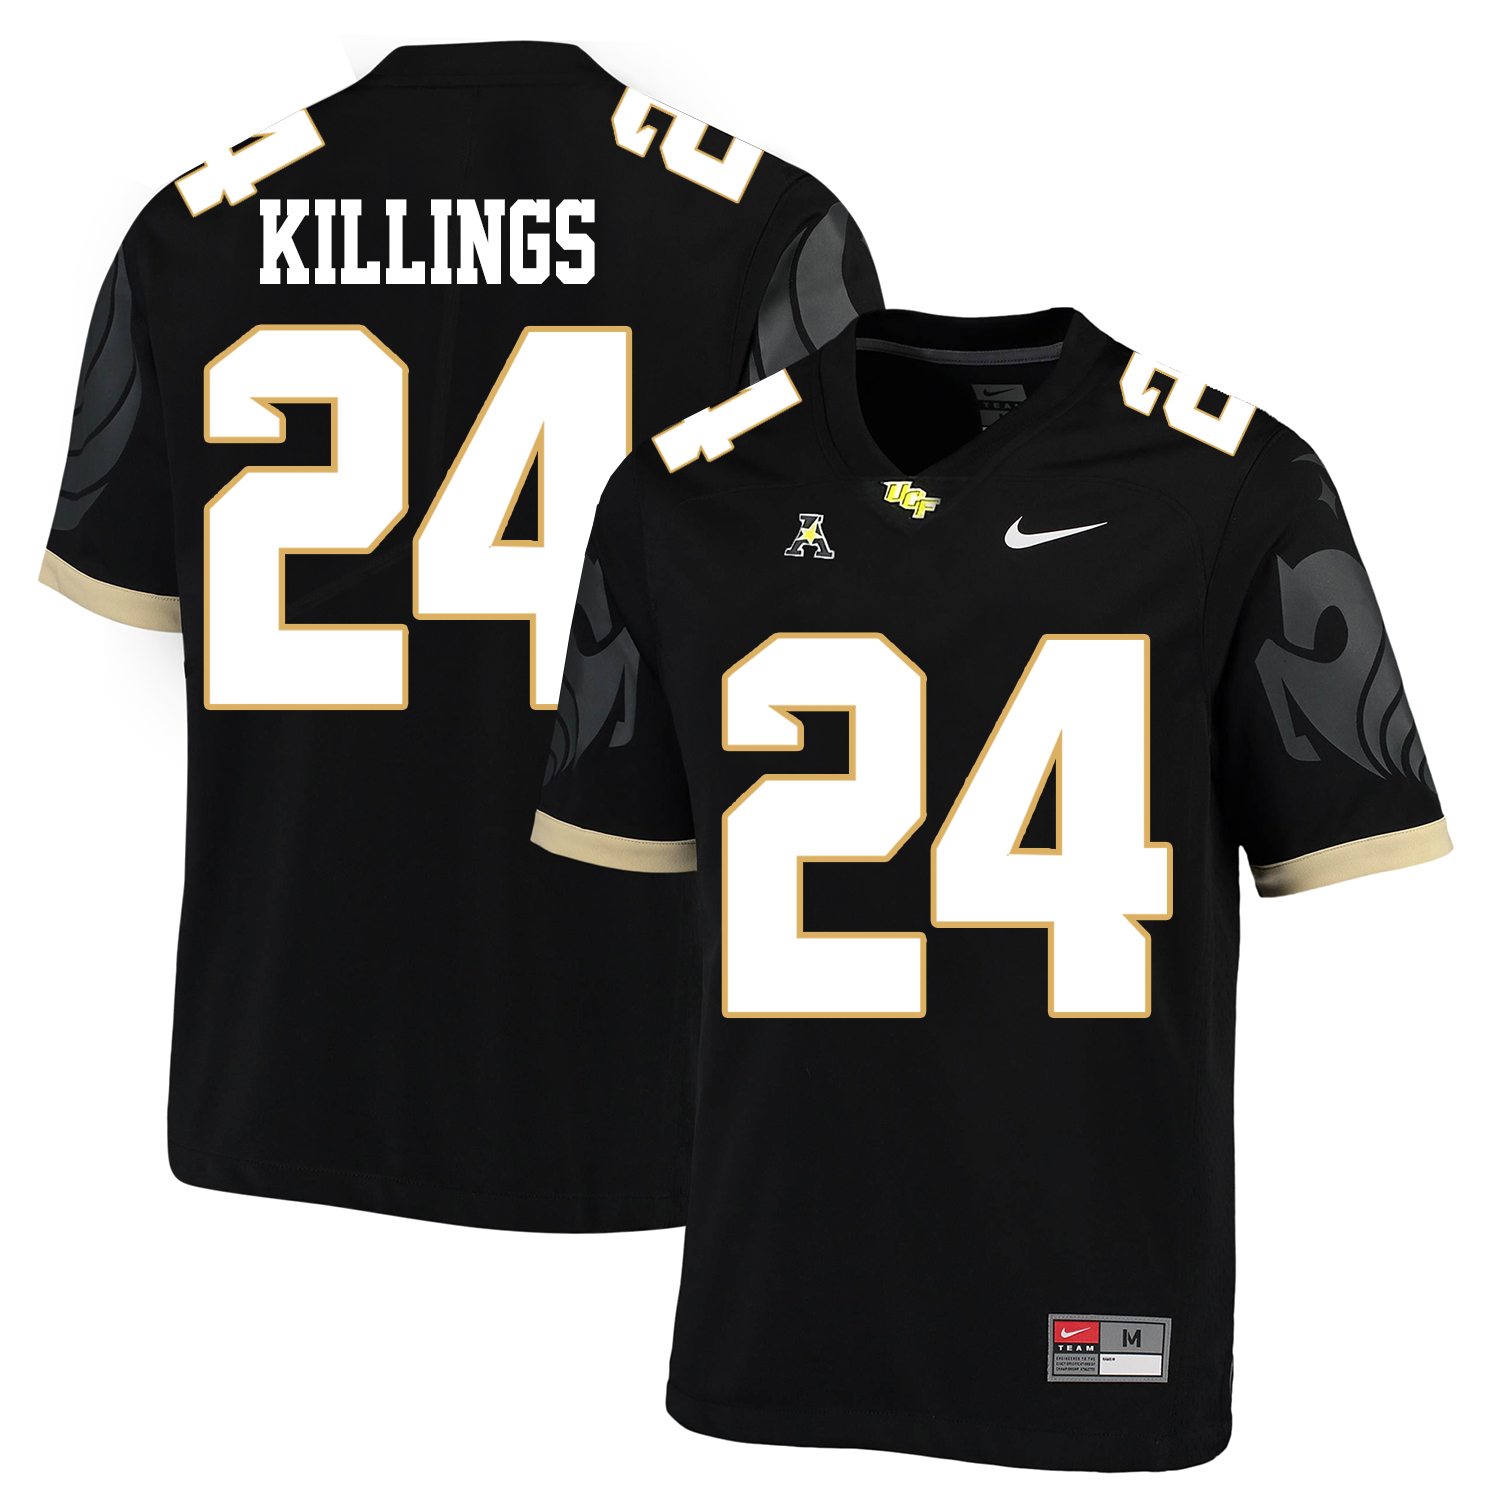 UCF Knights 24 D.J. Killings Black College Football Jersey